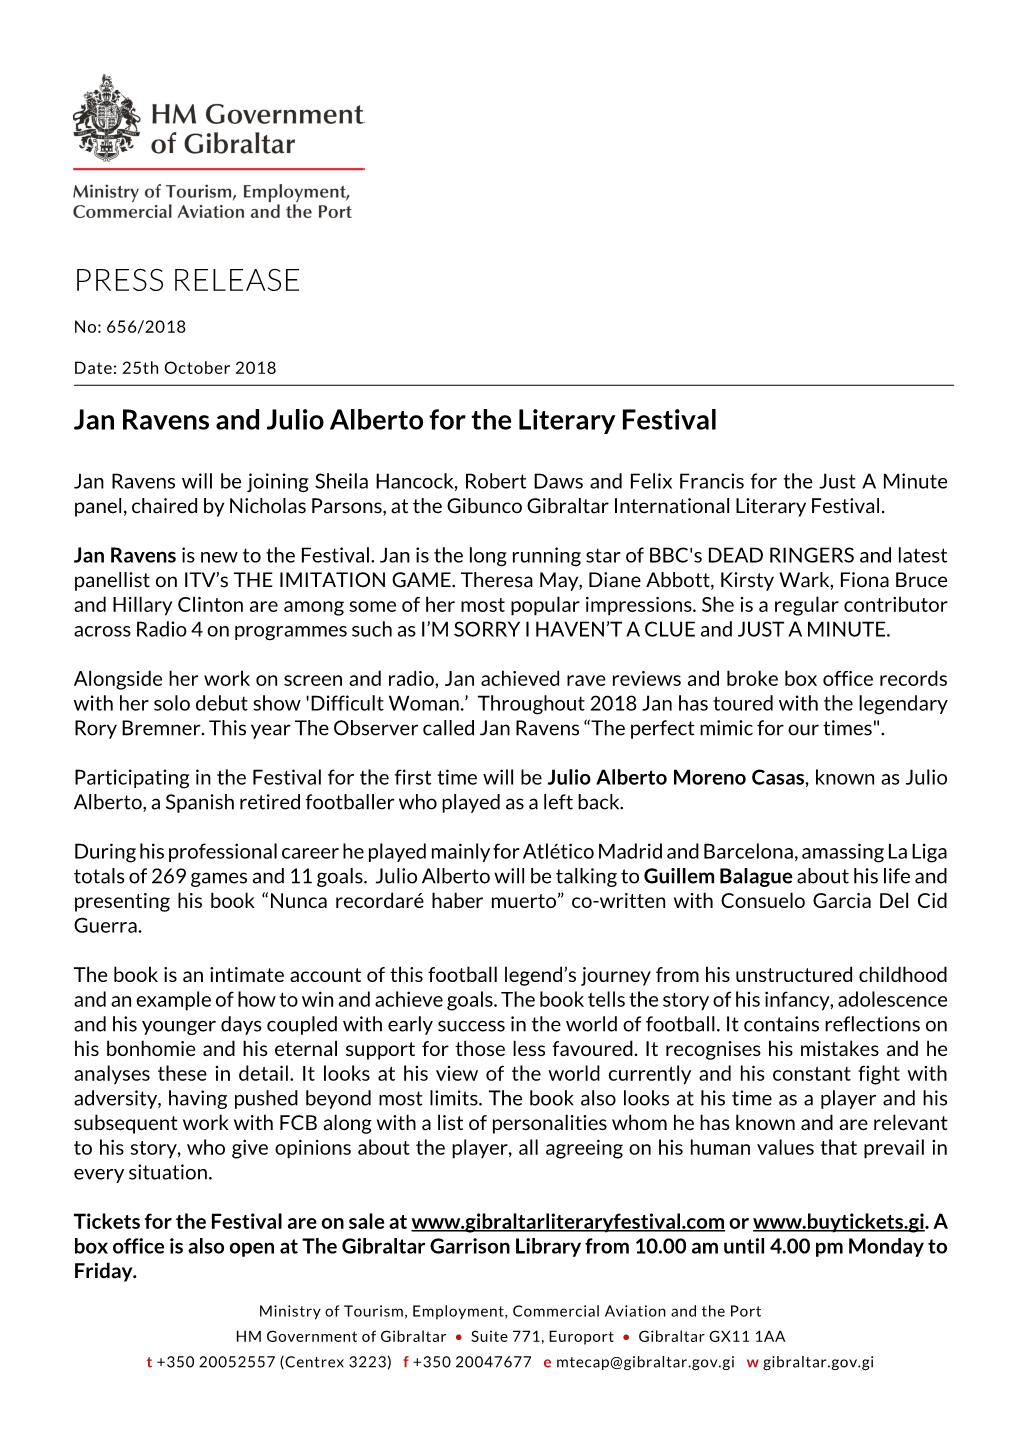 Jan Ravens and Julio Alberto for the Literary Festival